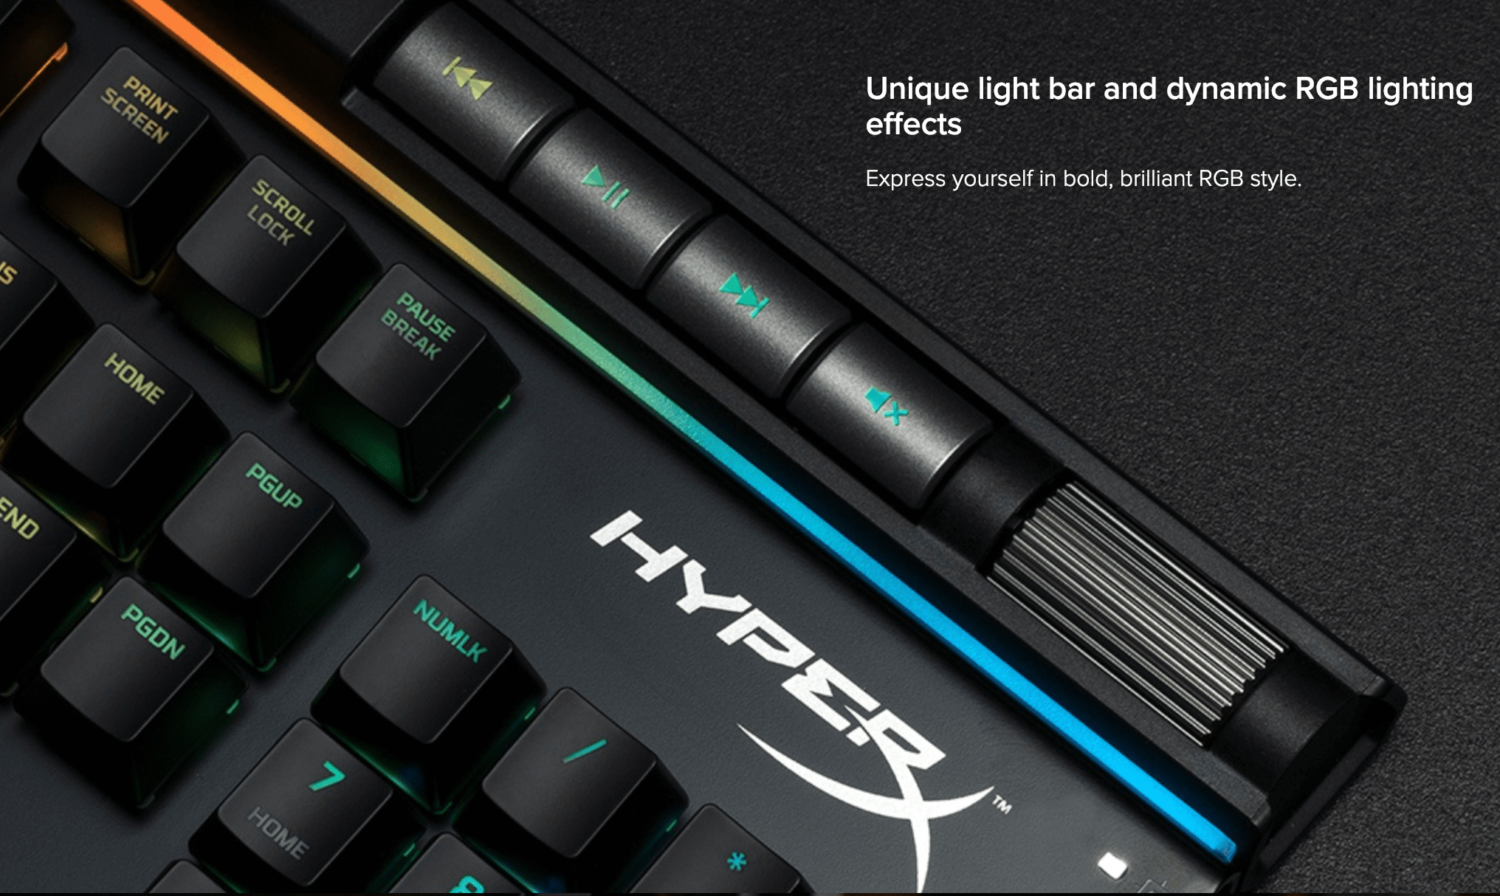 Is HyperX Alloy Elite gaming keyboard worth buying?